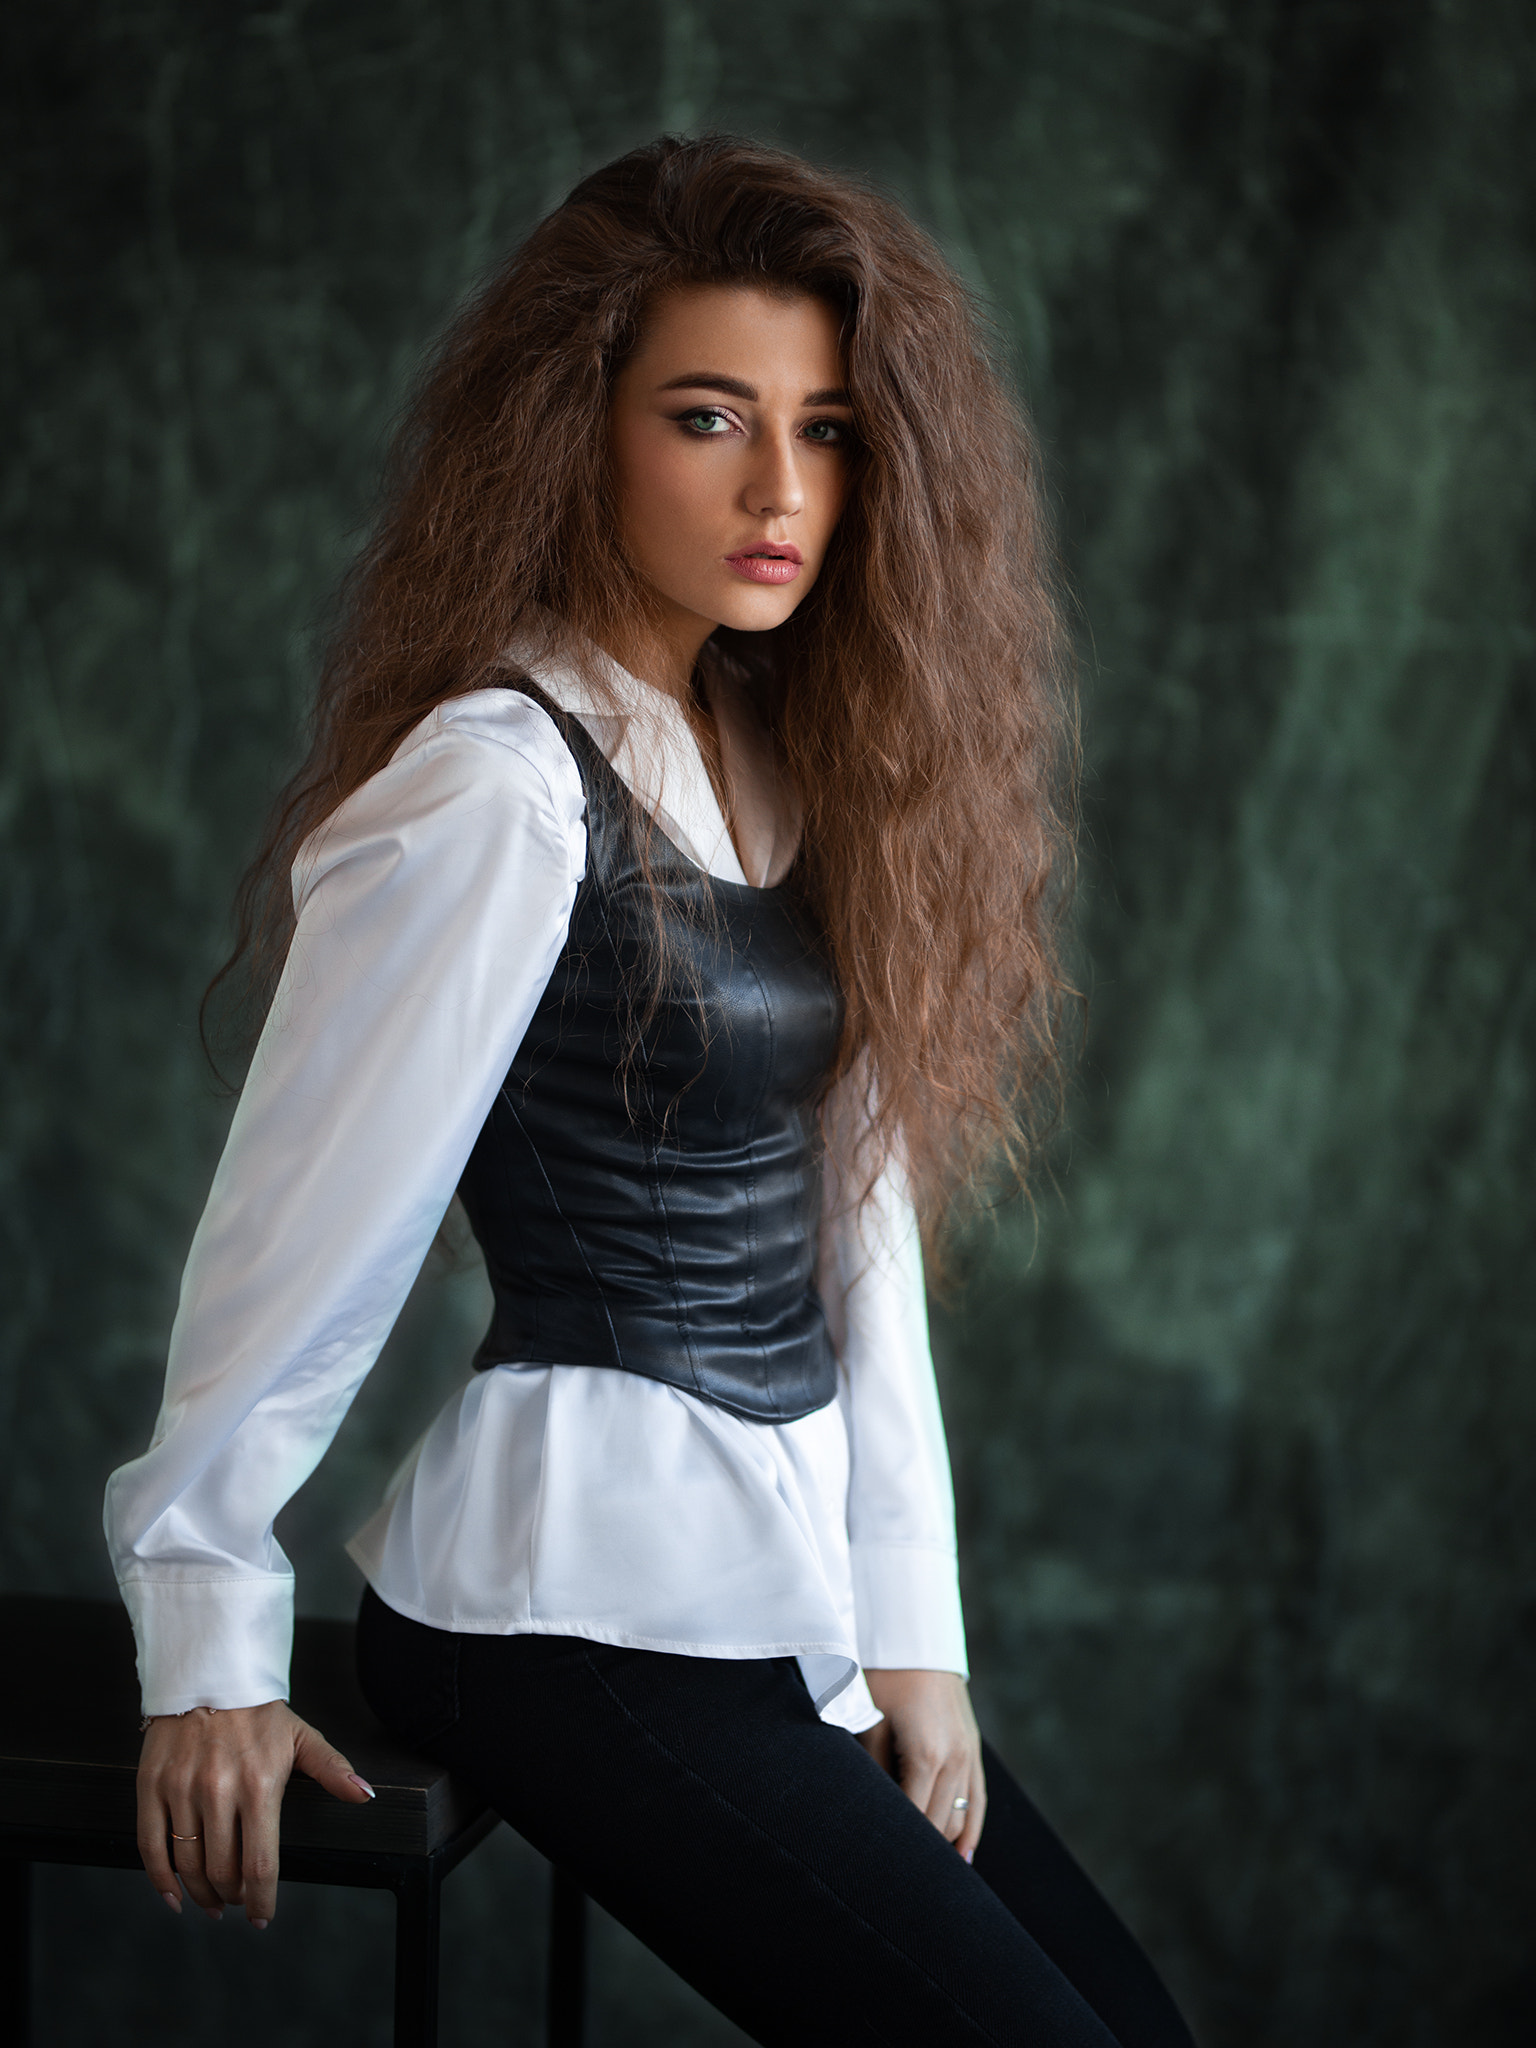 Dmitry Sn Women Brunette Long Hair Green Eyes Looking At Viewer Vest White Clothing Leather Studio D 1536x2048